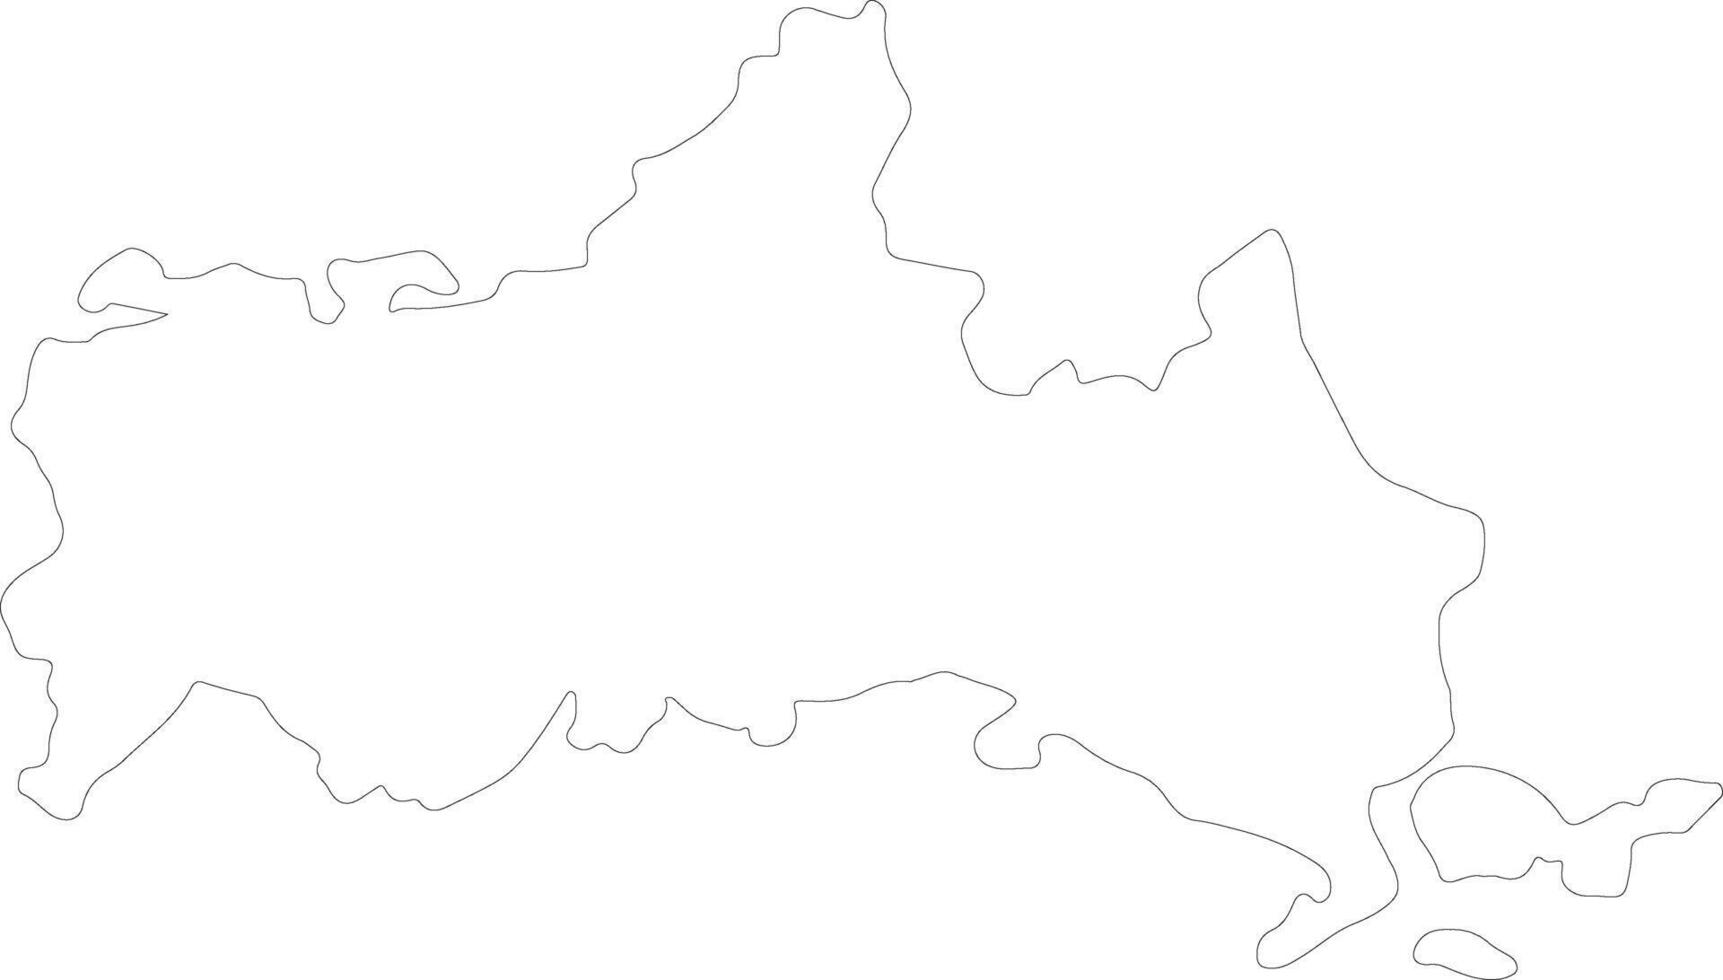 yamaguchi Giappone schema carta geografica vettore